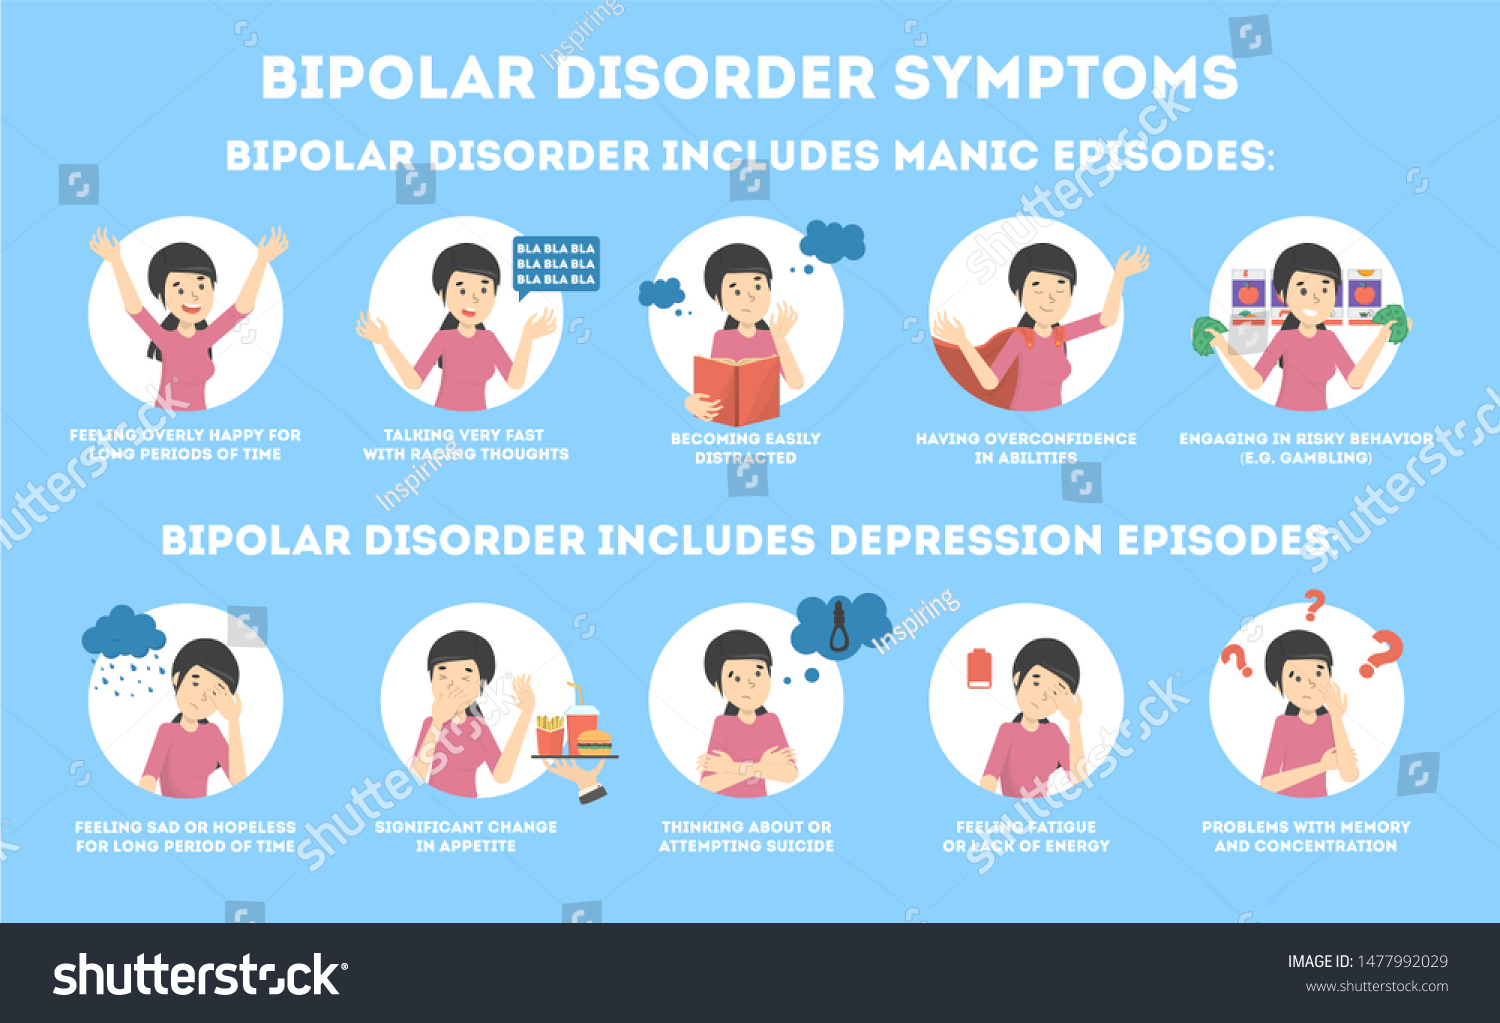 Bipolar Disorder Symptoms Infographic Mental Health Stock Illustration 1477992029 Shutterstock 0982